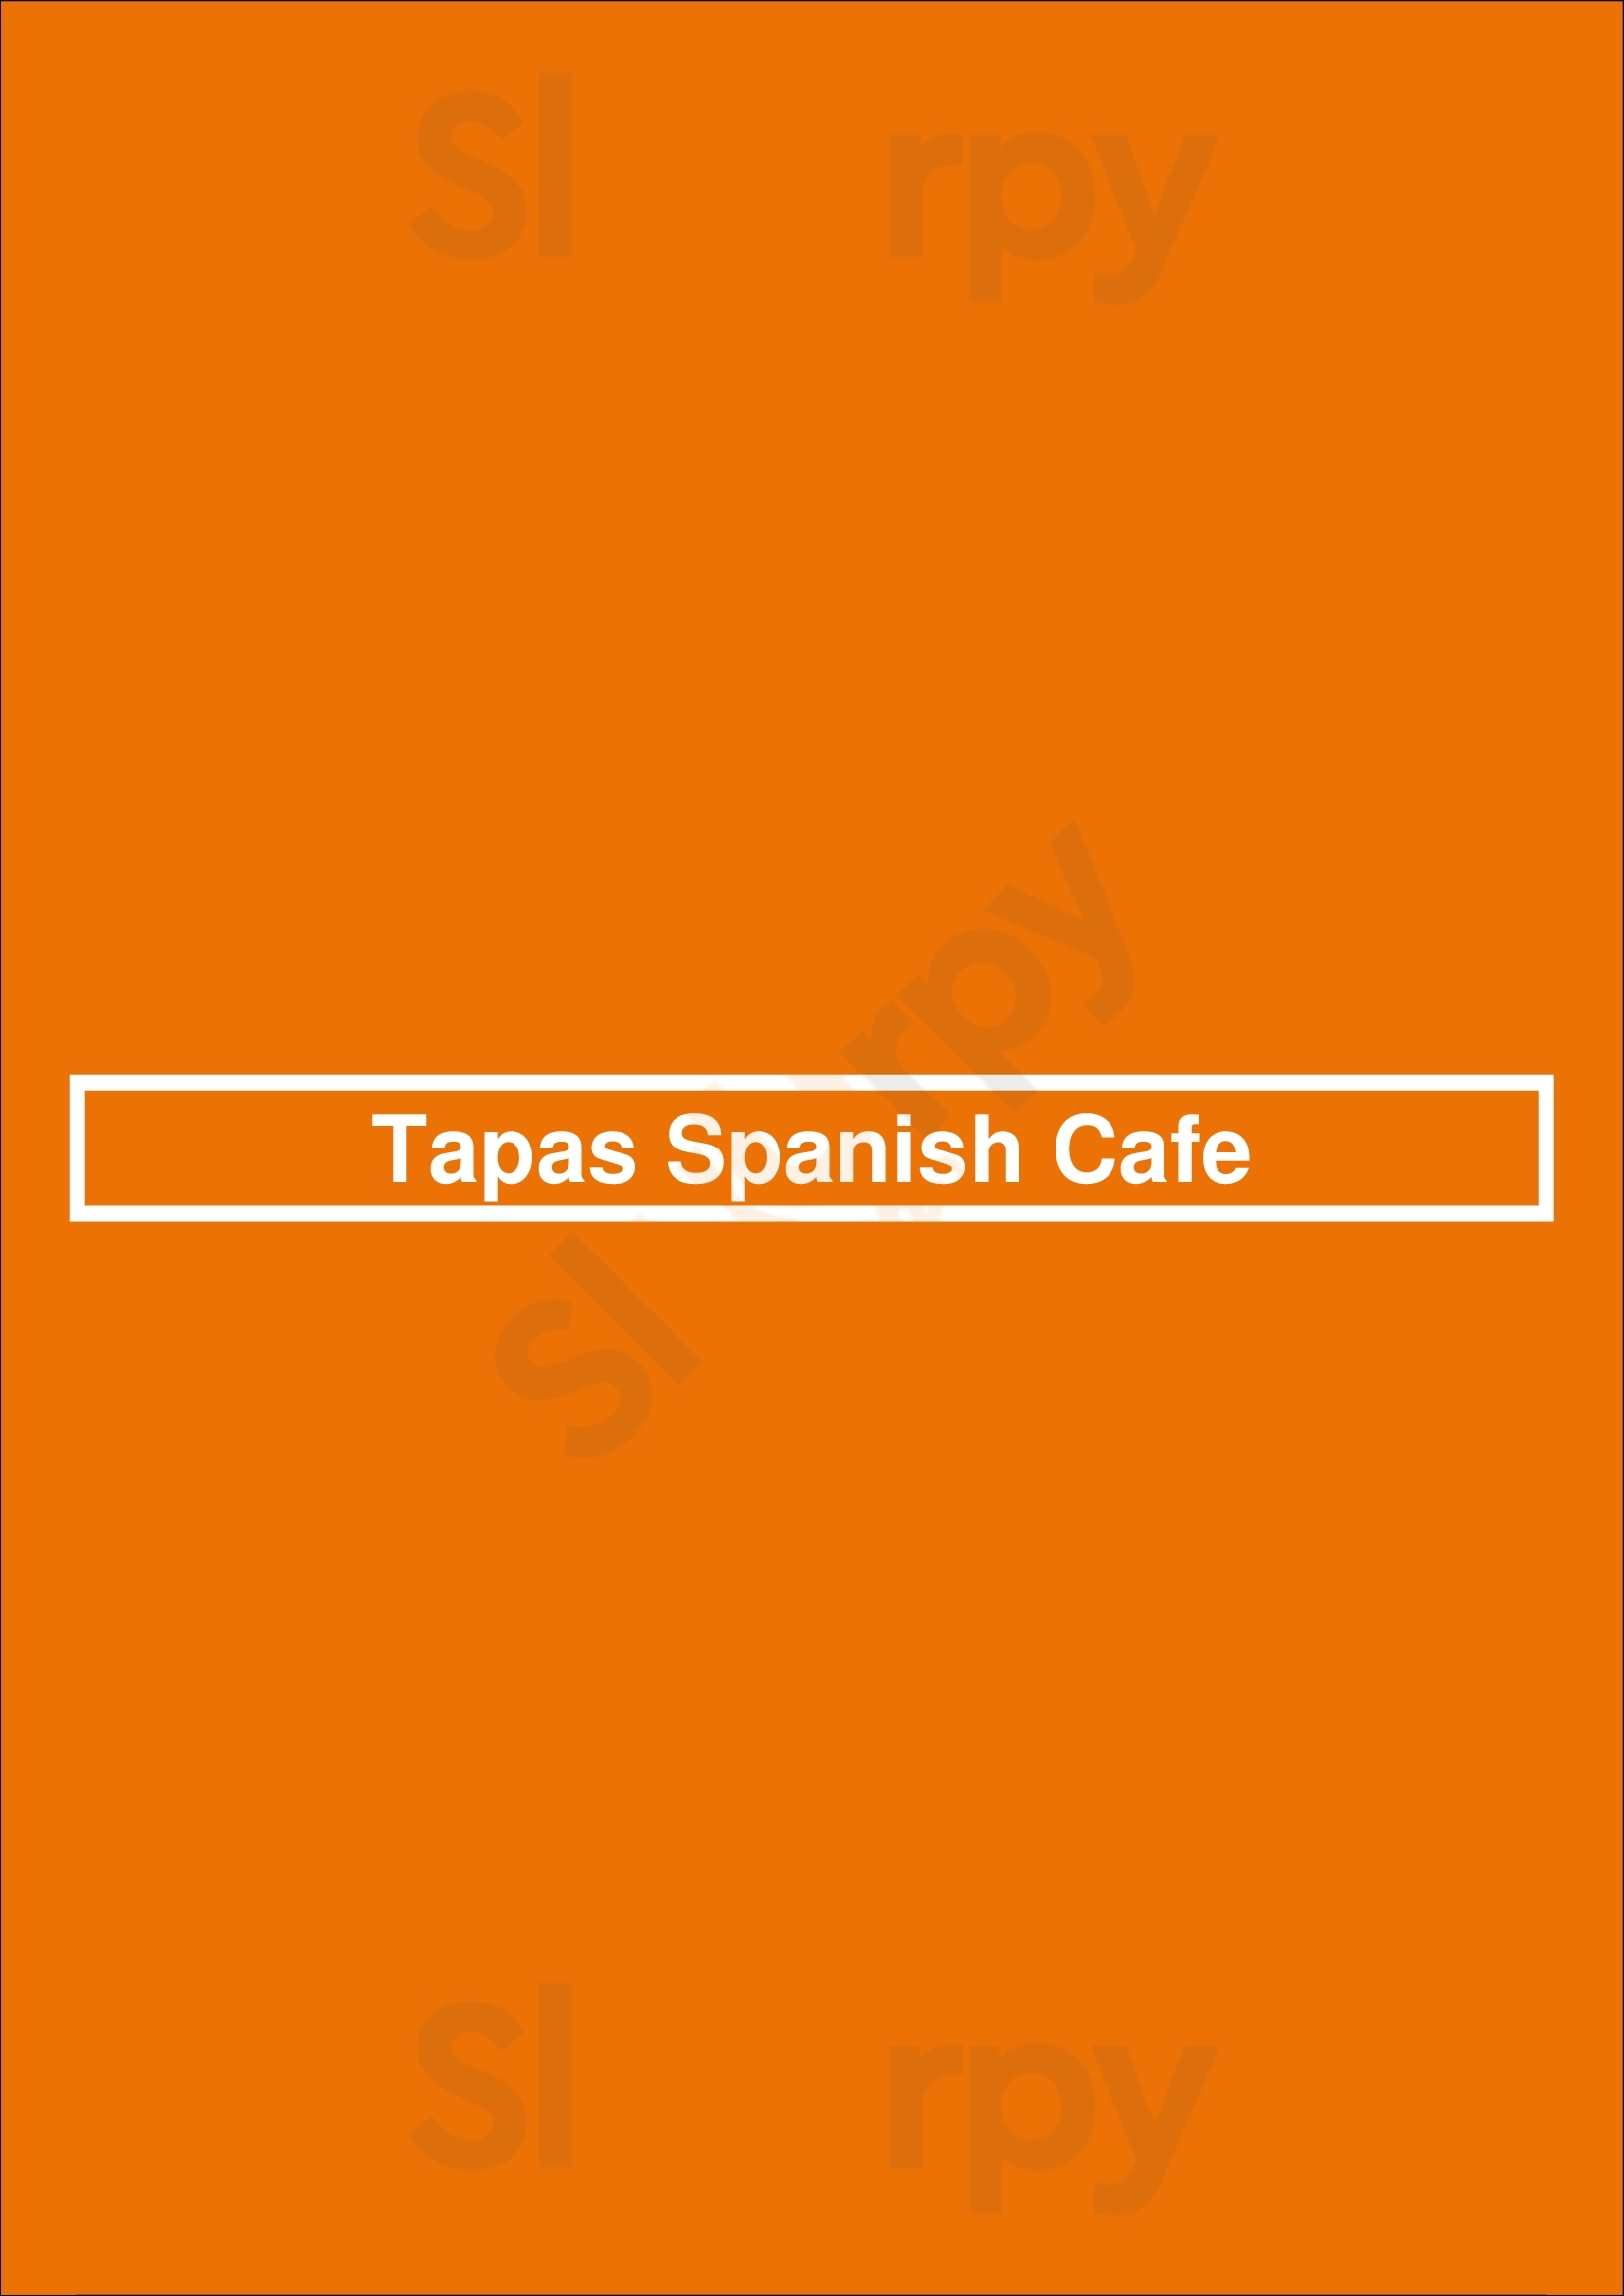 Tapas Spanish Cafe Tampa Menu - 1